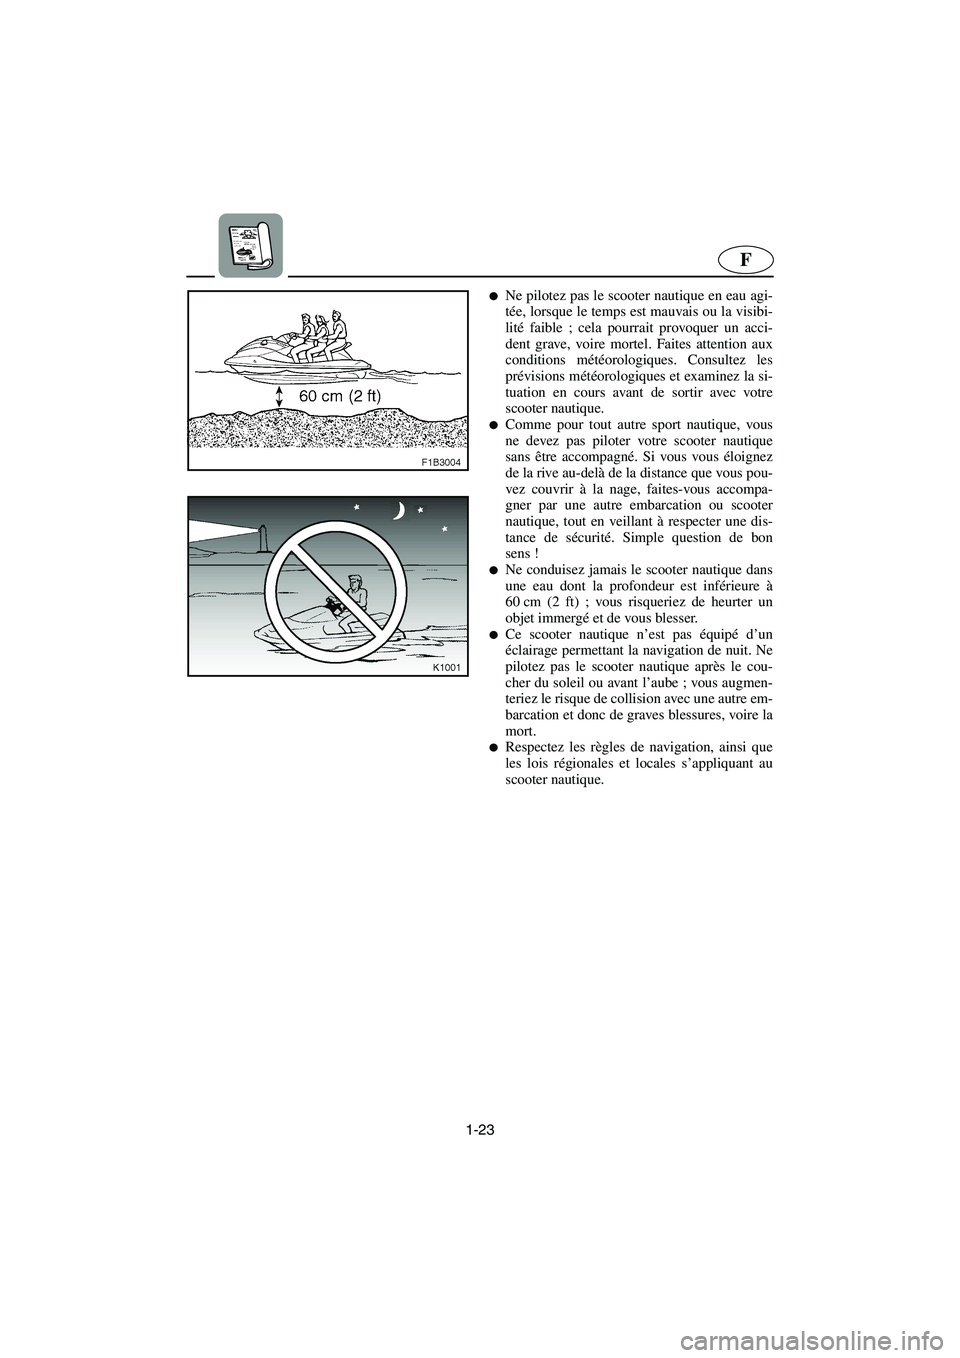 YAMAHA VX 2006  Manuale de Empleo (in Spanish) 1-23
F
Ne pilotez pas le scooter nautique en eau agi-
tée, lorsque le temps est mauvais ou la visibi-
lité faible ; cela pourrait provoquer un acci-
dent grave, voire mortel. Faites attention aux
c